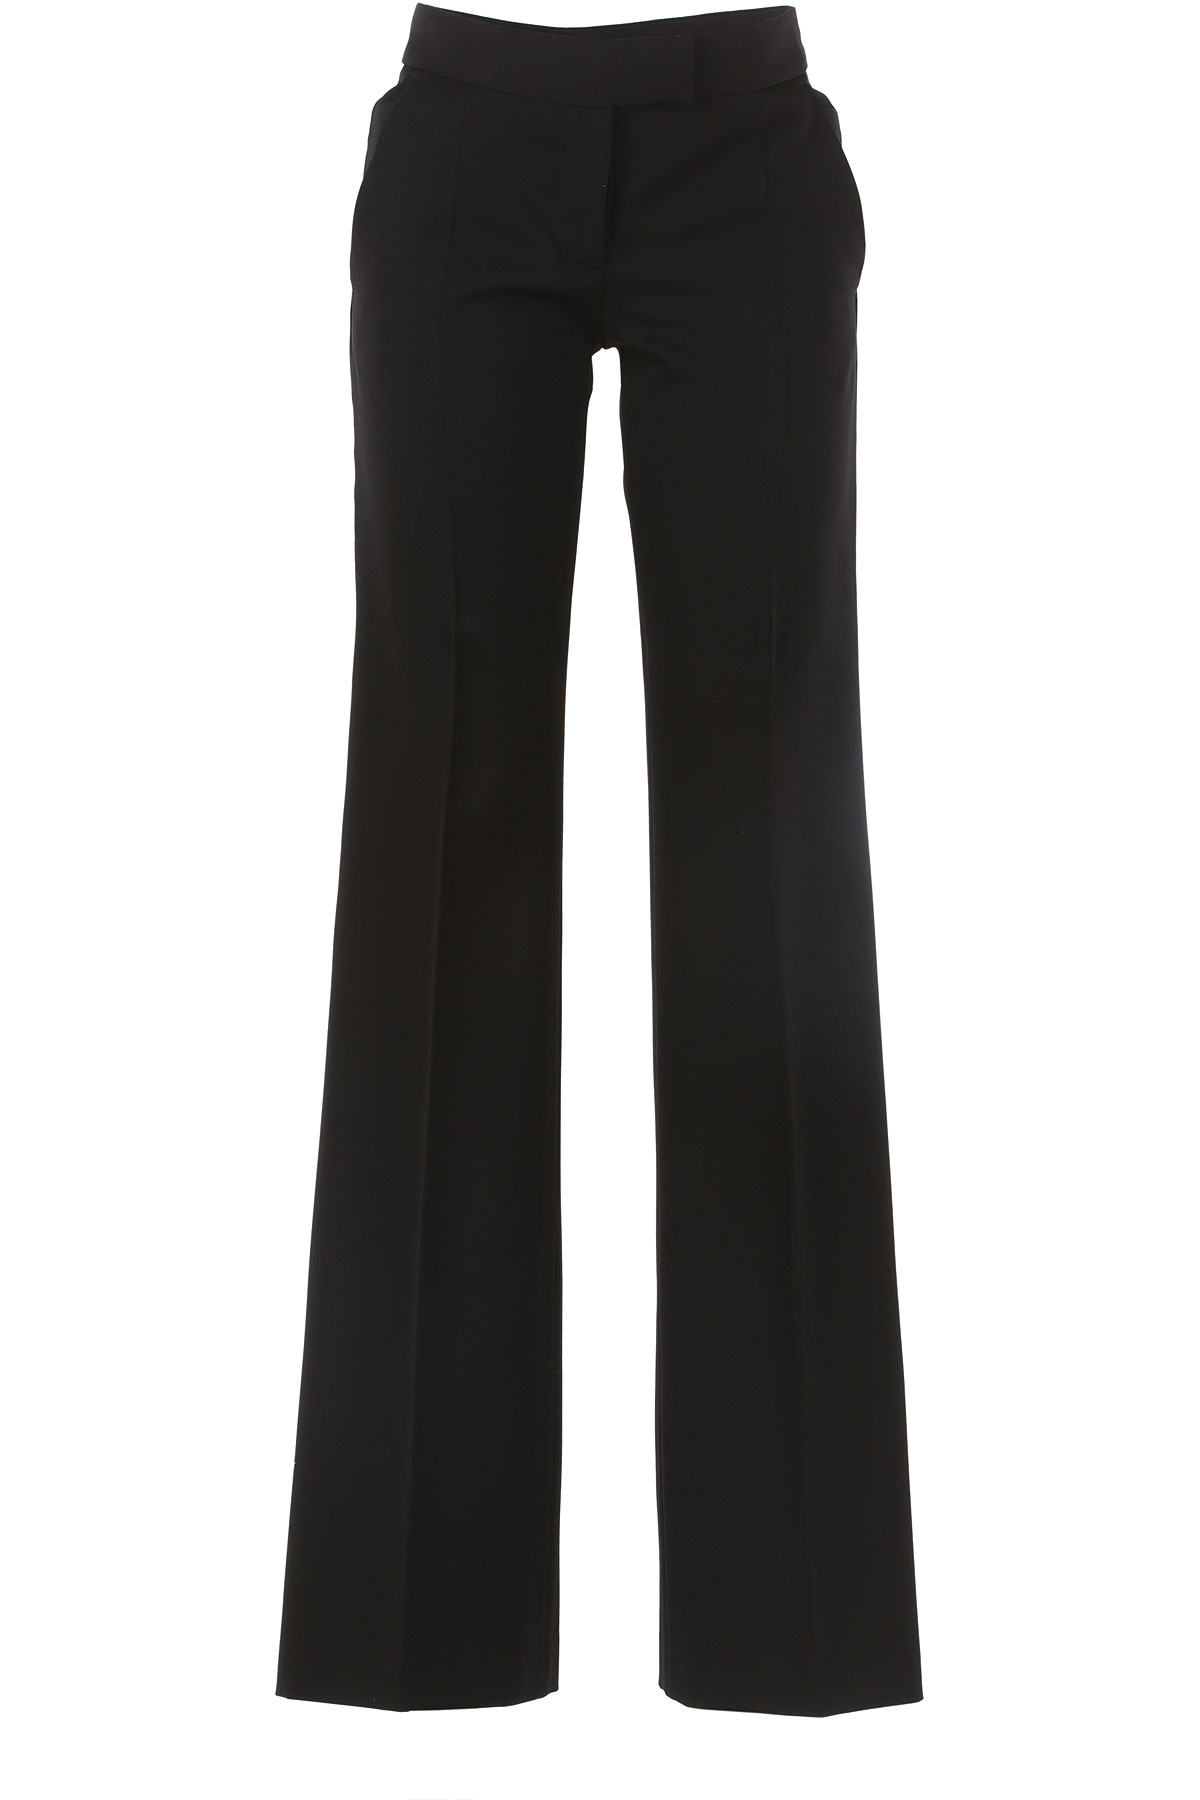 Stella McCartney Pantalon Femme Outlet, Noir, Laine, 2017, 36 38 42